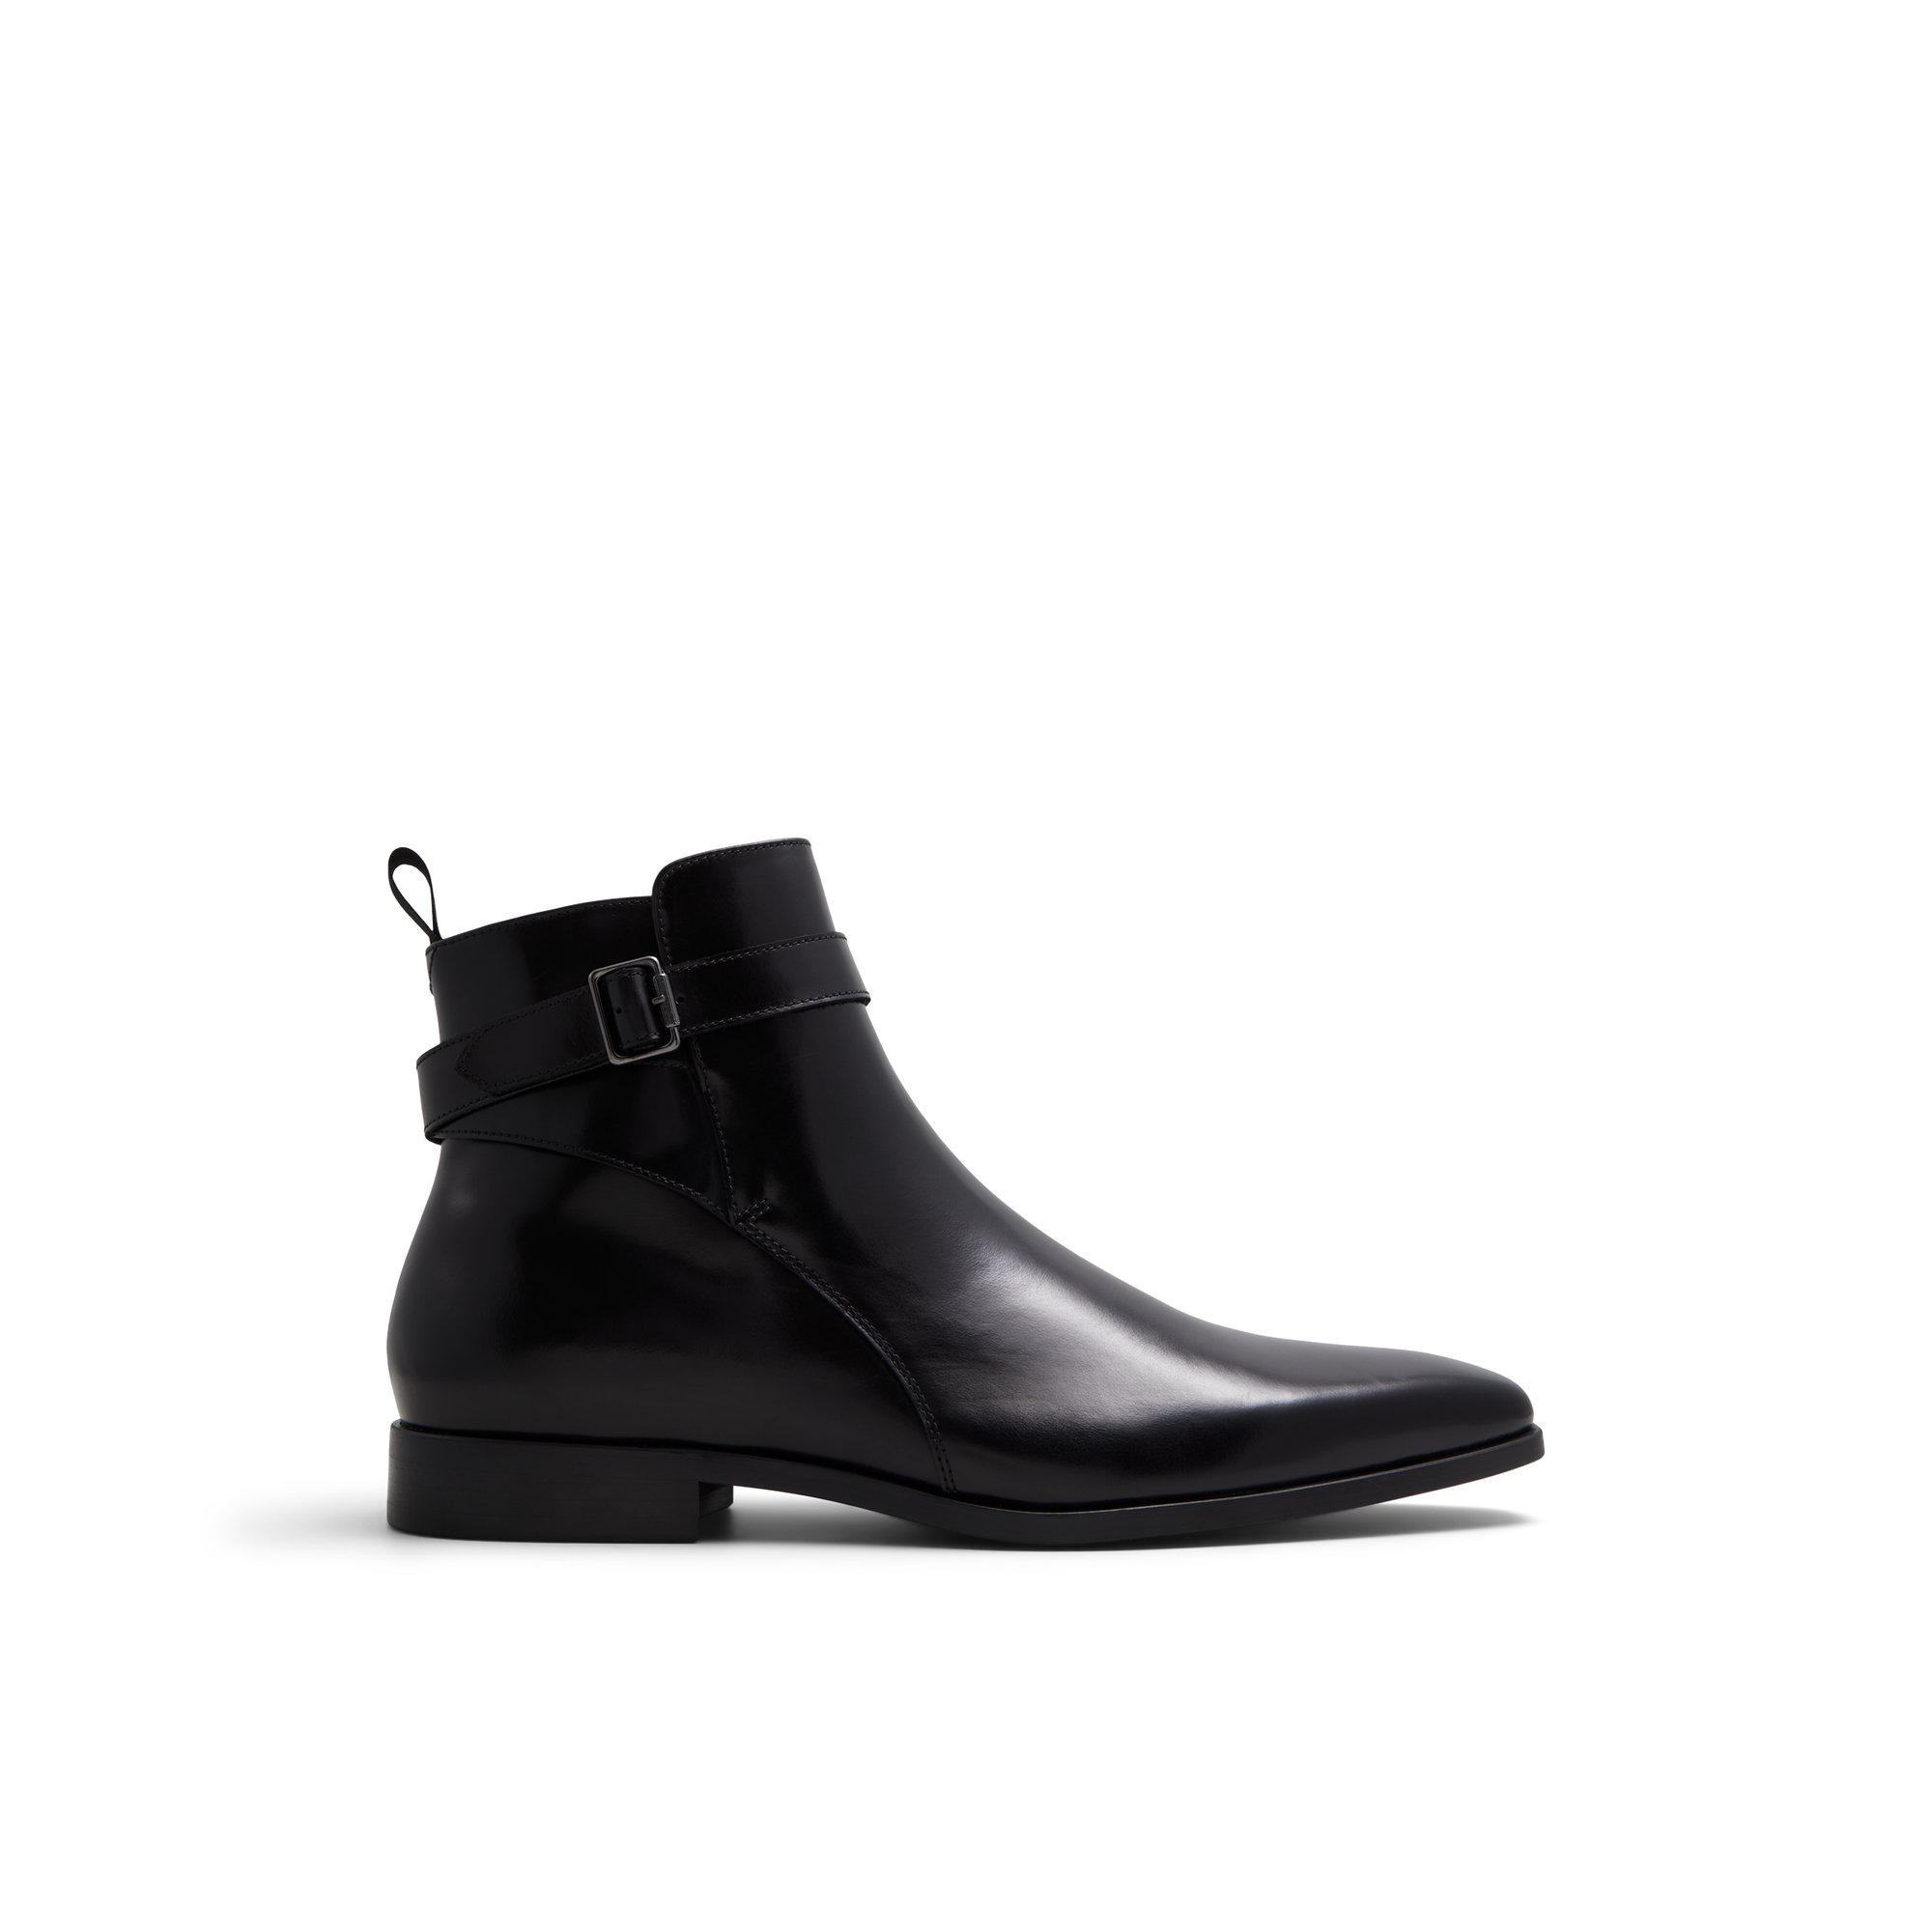 ALDO Leicester - Men's Boots - Black